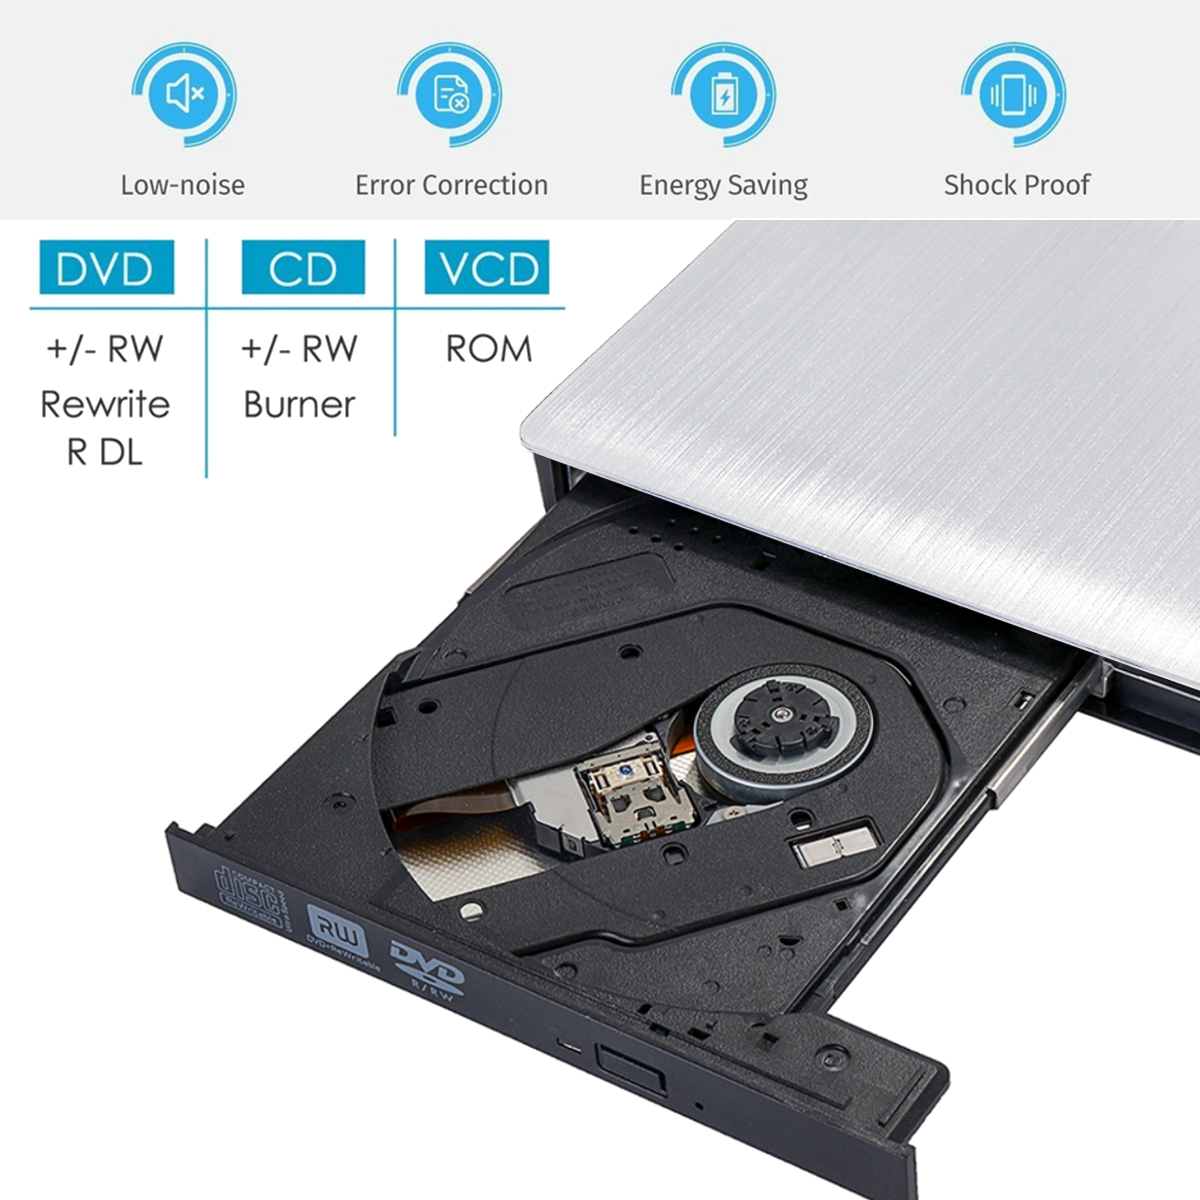 USB 3.0 Slim External DVD Optical Drive DVD-RW CD-RW Combo Drive Burner Reader Player 13